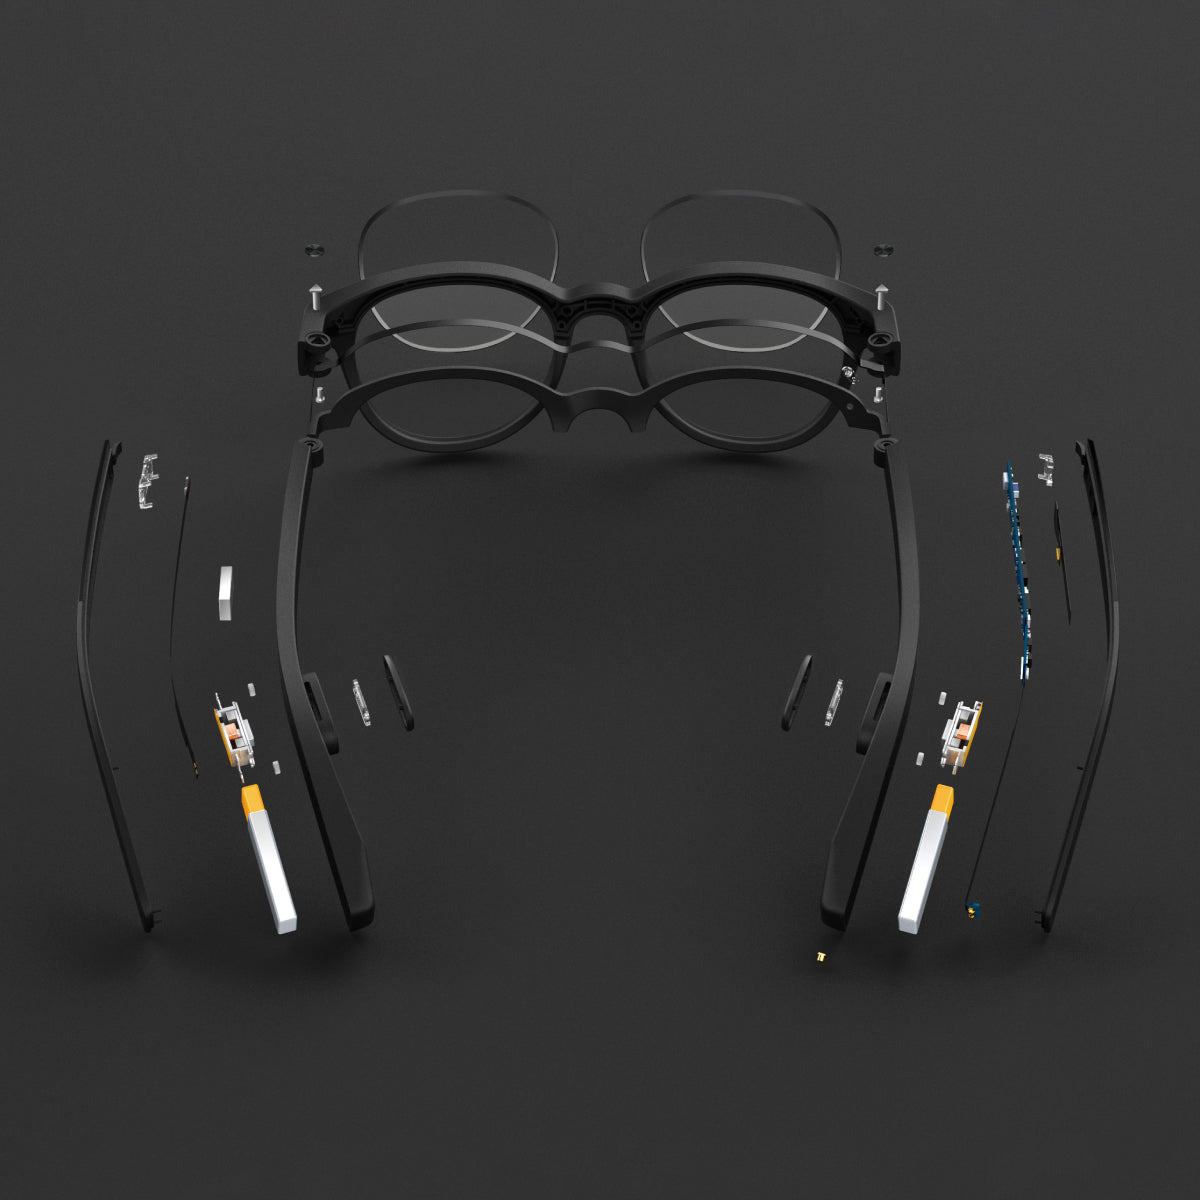 Vue Pro - Classic | Eyeglasses | Vue Smart Glasses